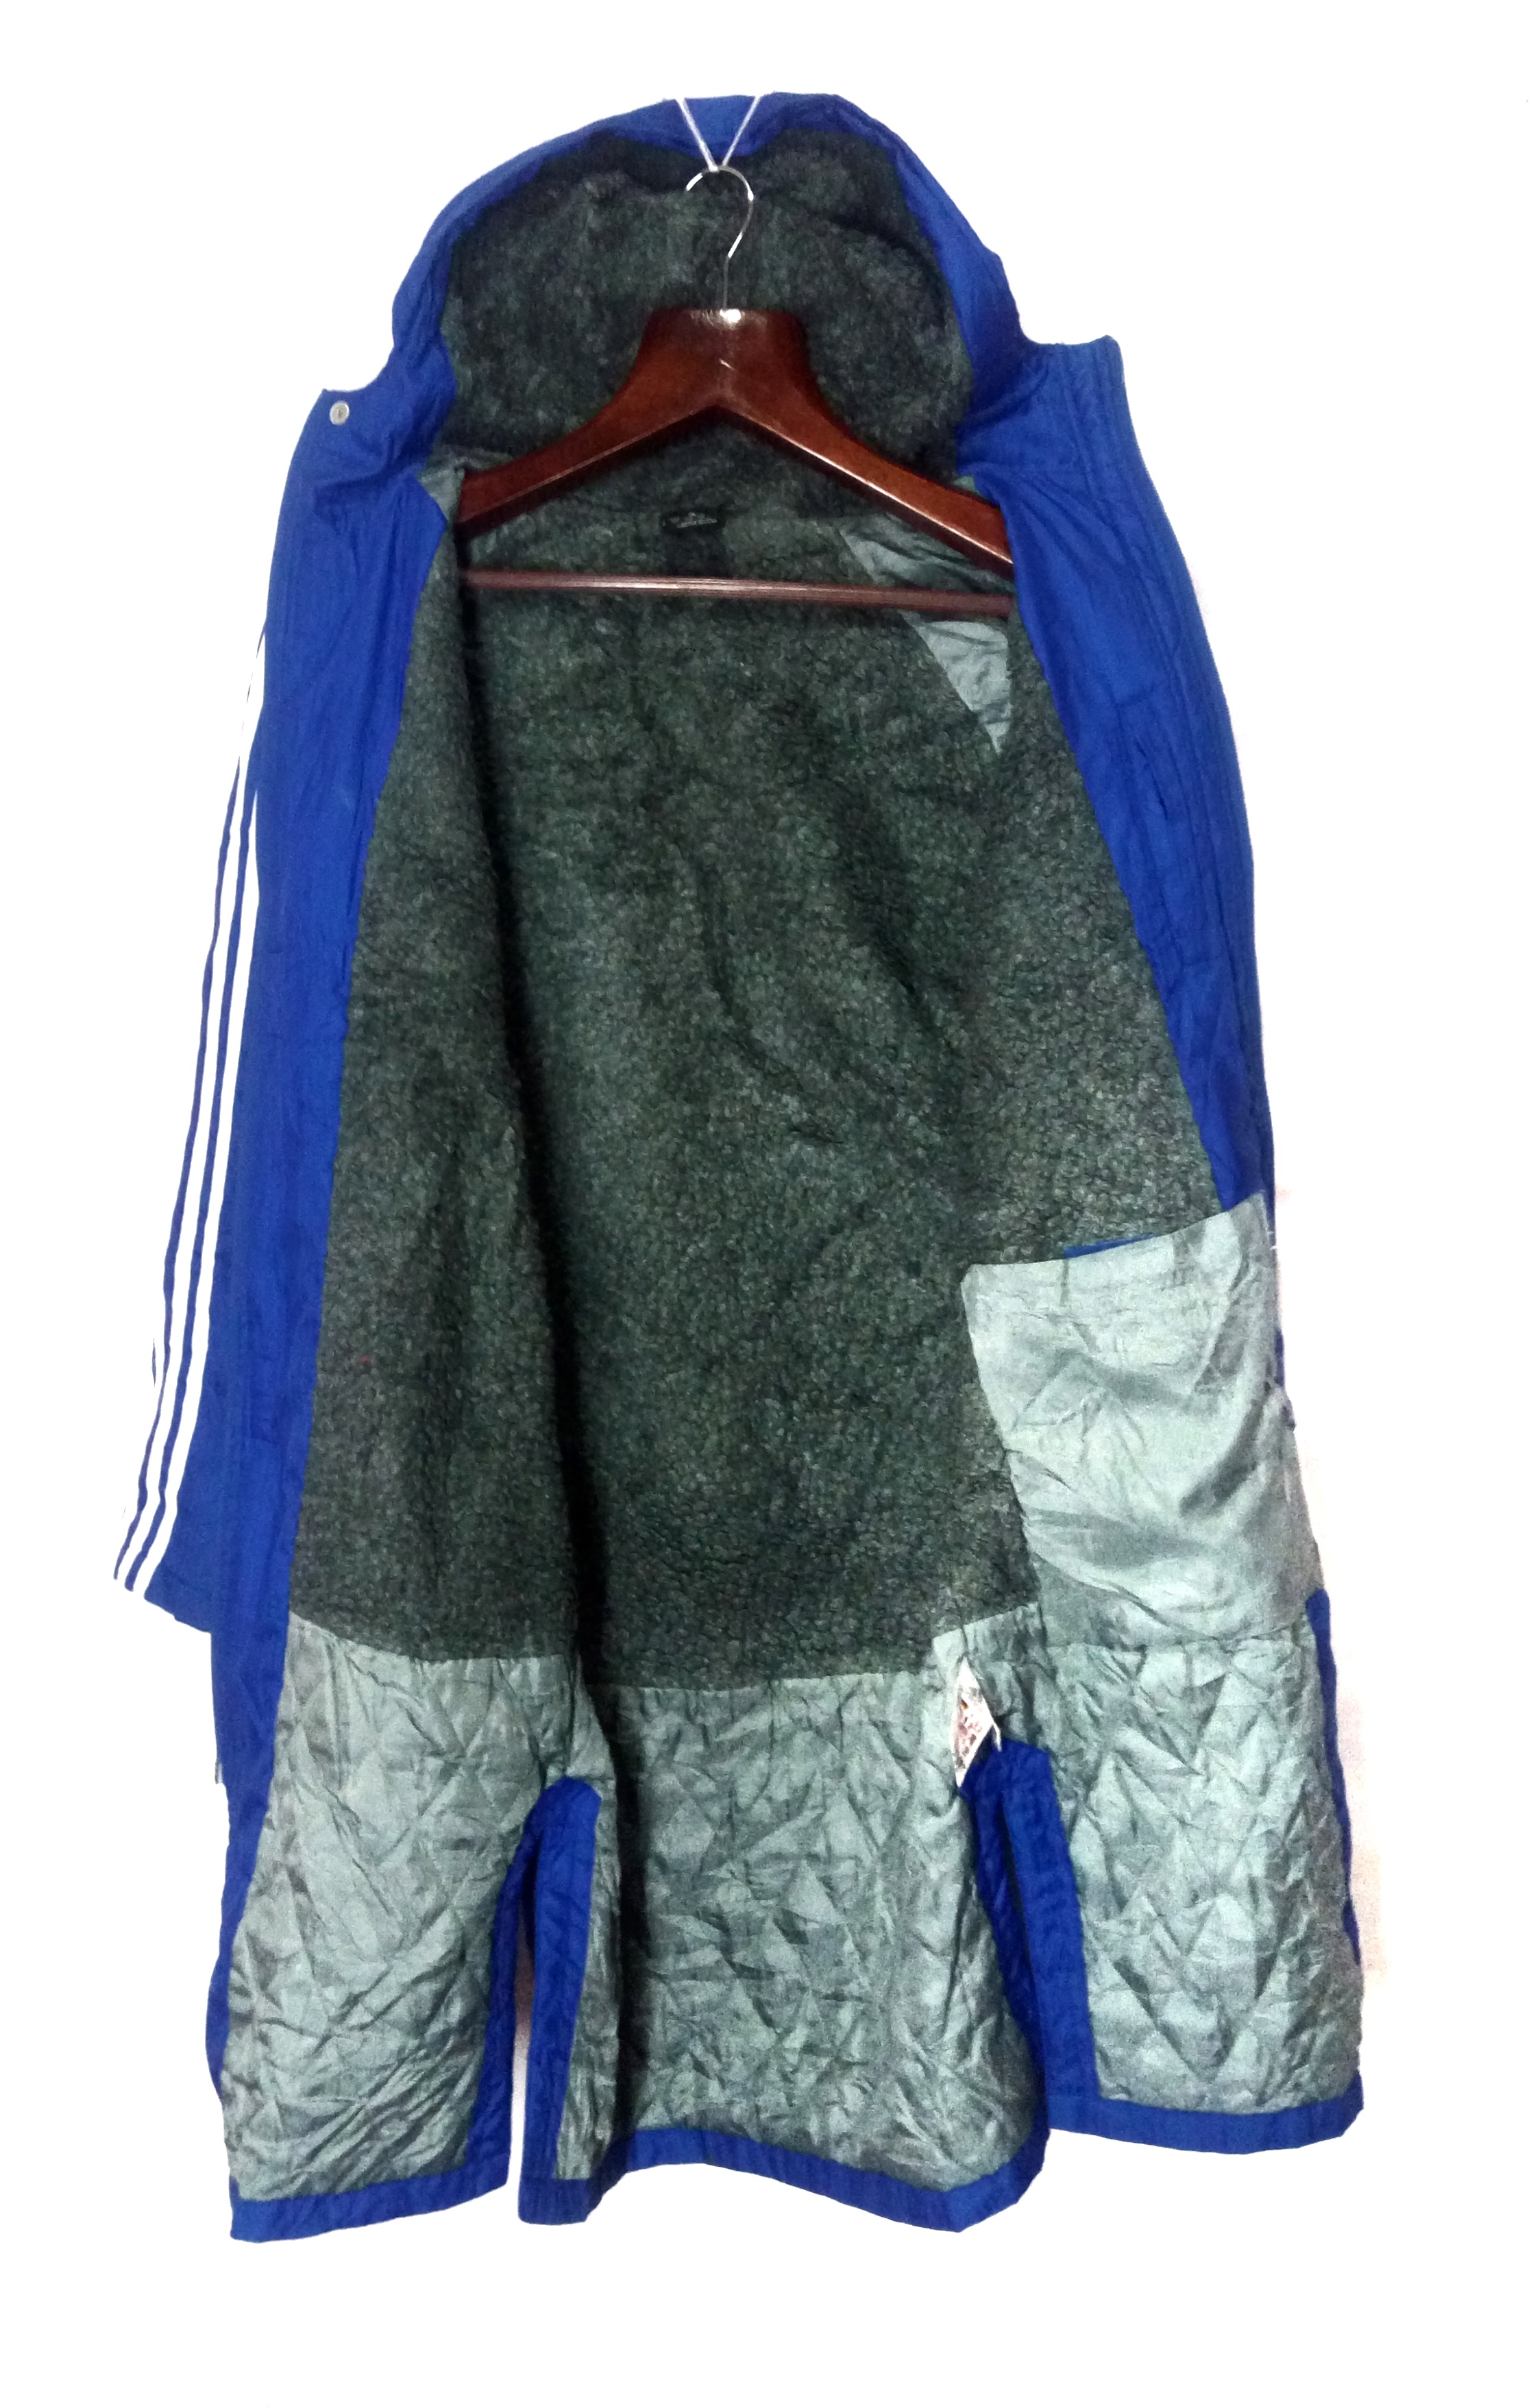 Adidas big logo sherpa inner lining long jacket hoodie parka winter size M/L - 4